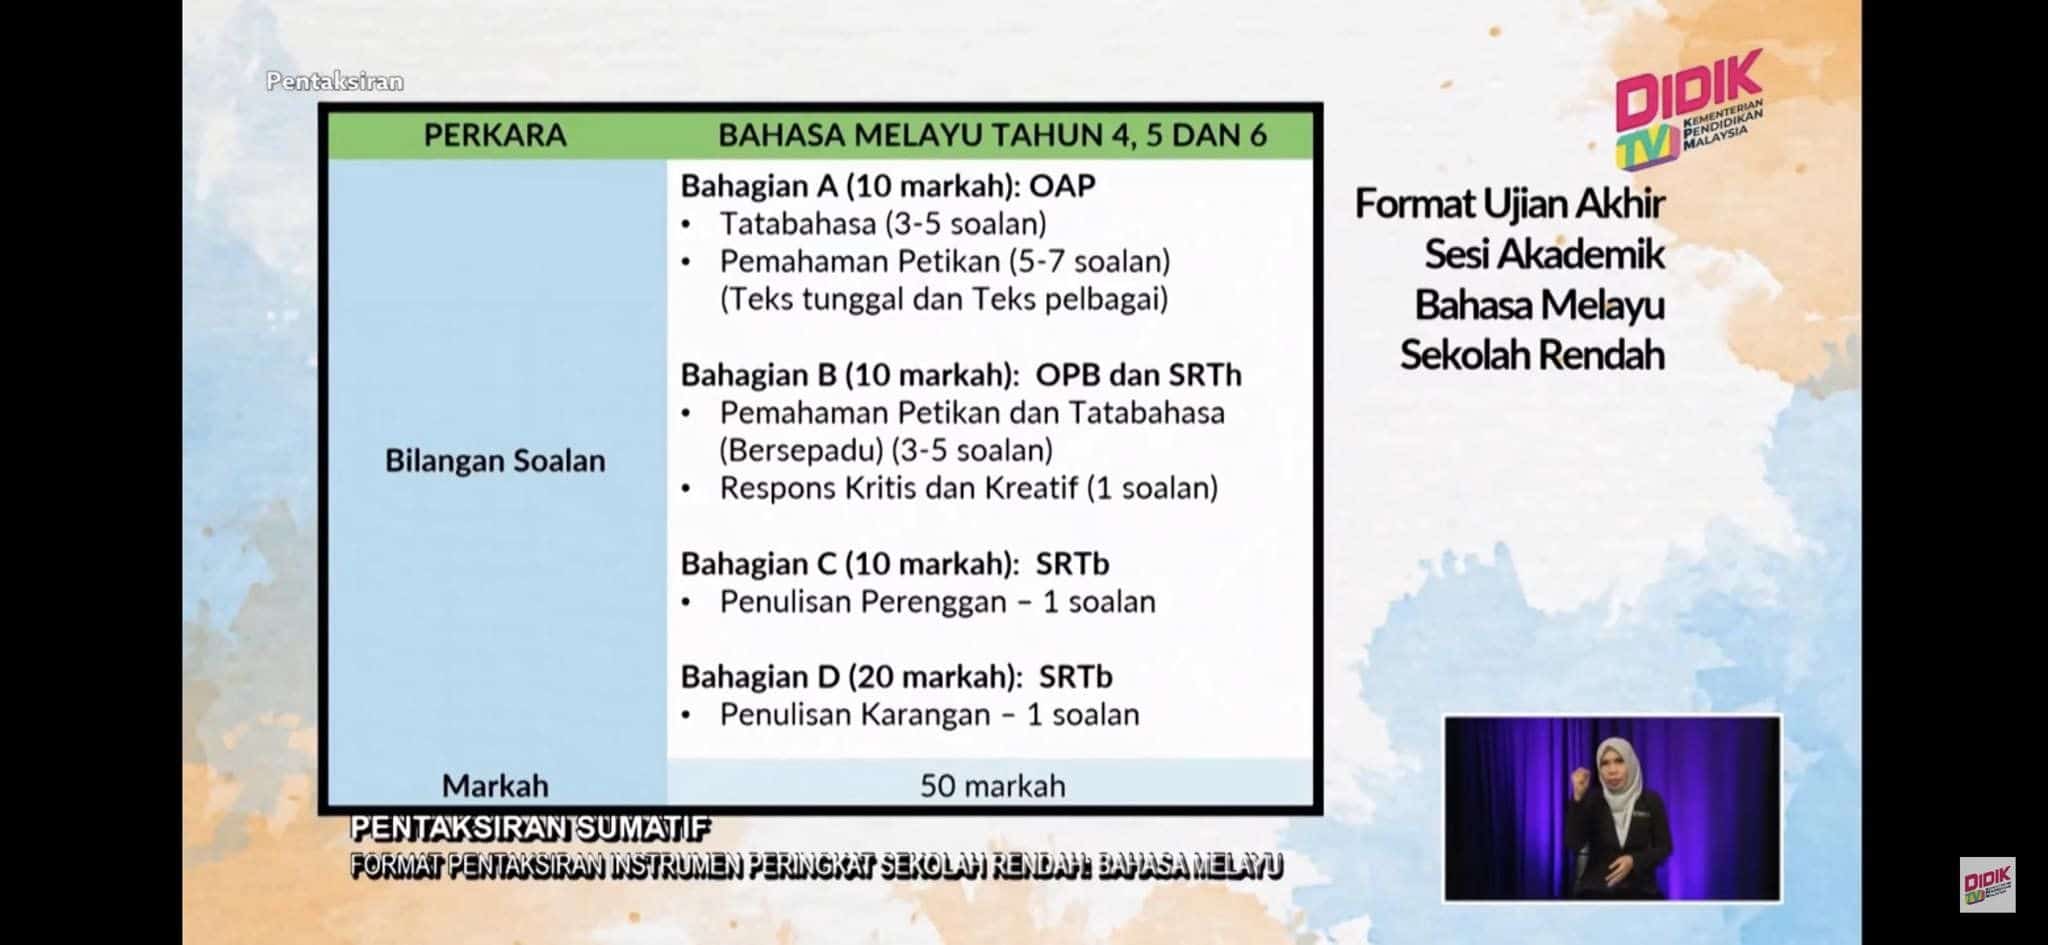 Format UASA Bahasa Melayu Sekolah Rendah